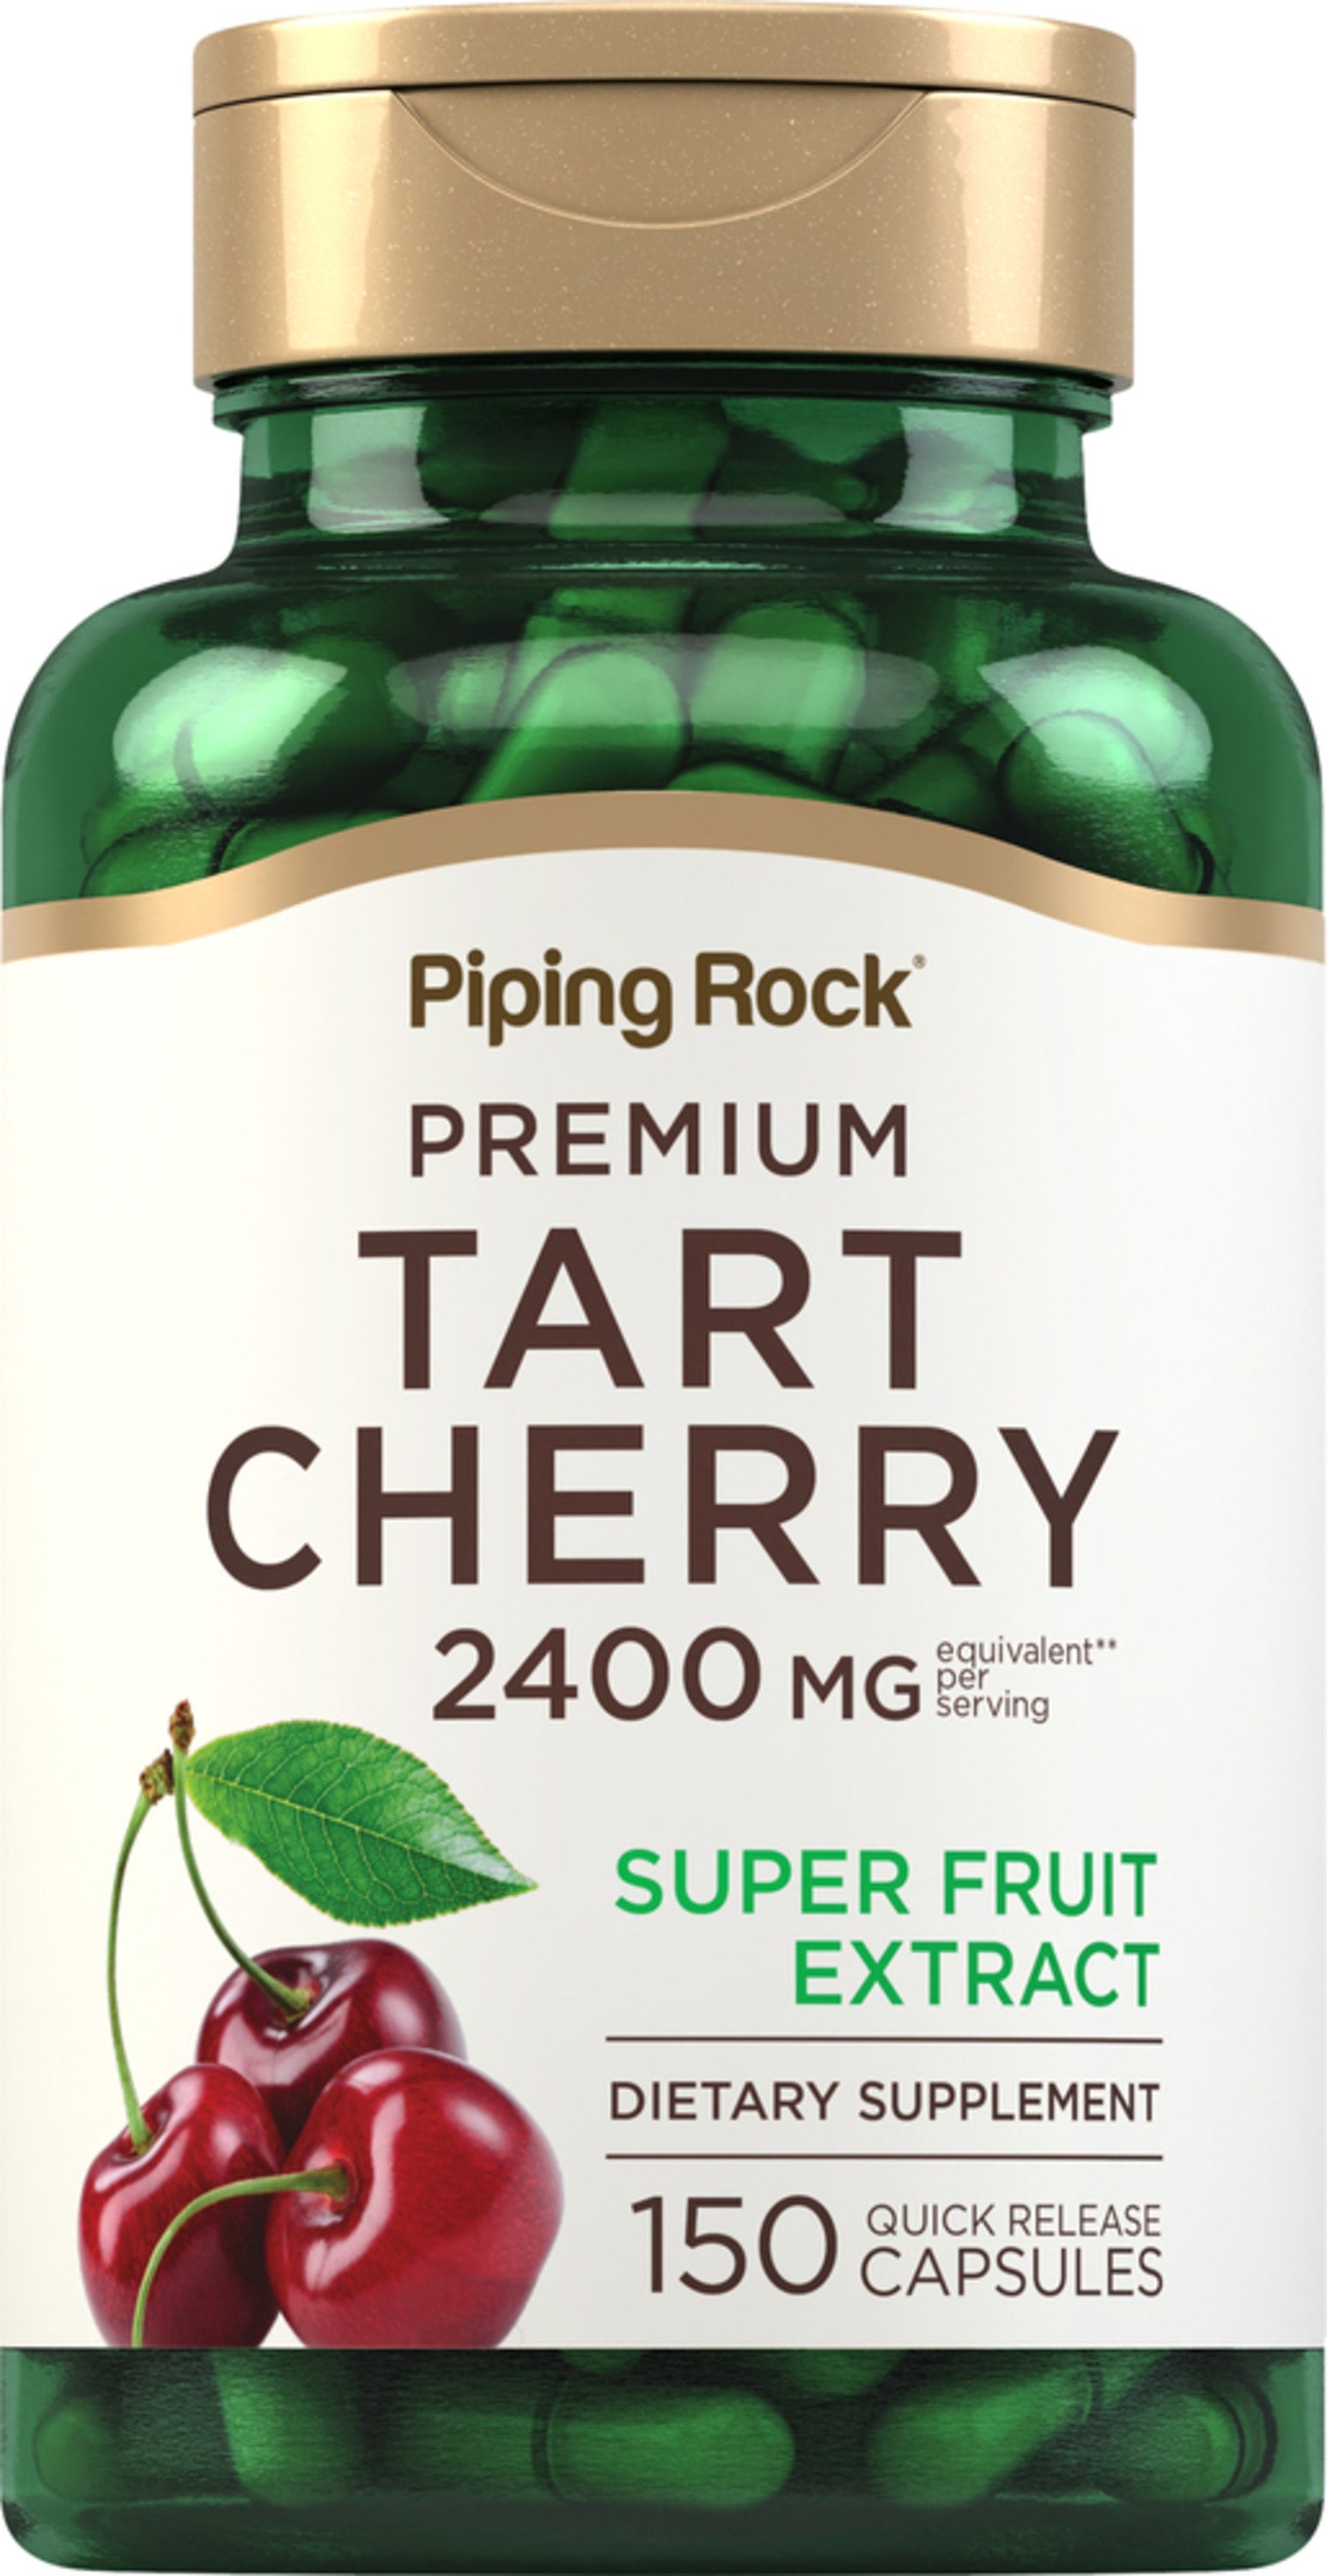 Ultra Tart Cherry, 2400 mg (per serving), 200 Quick Release Capsules